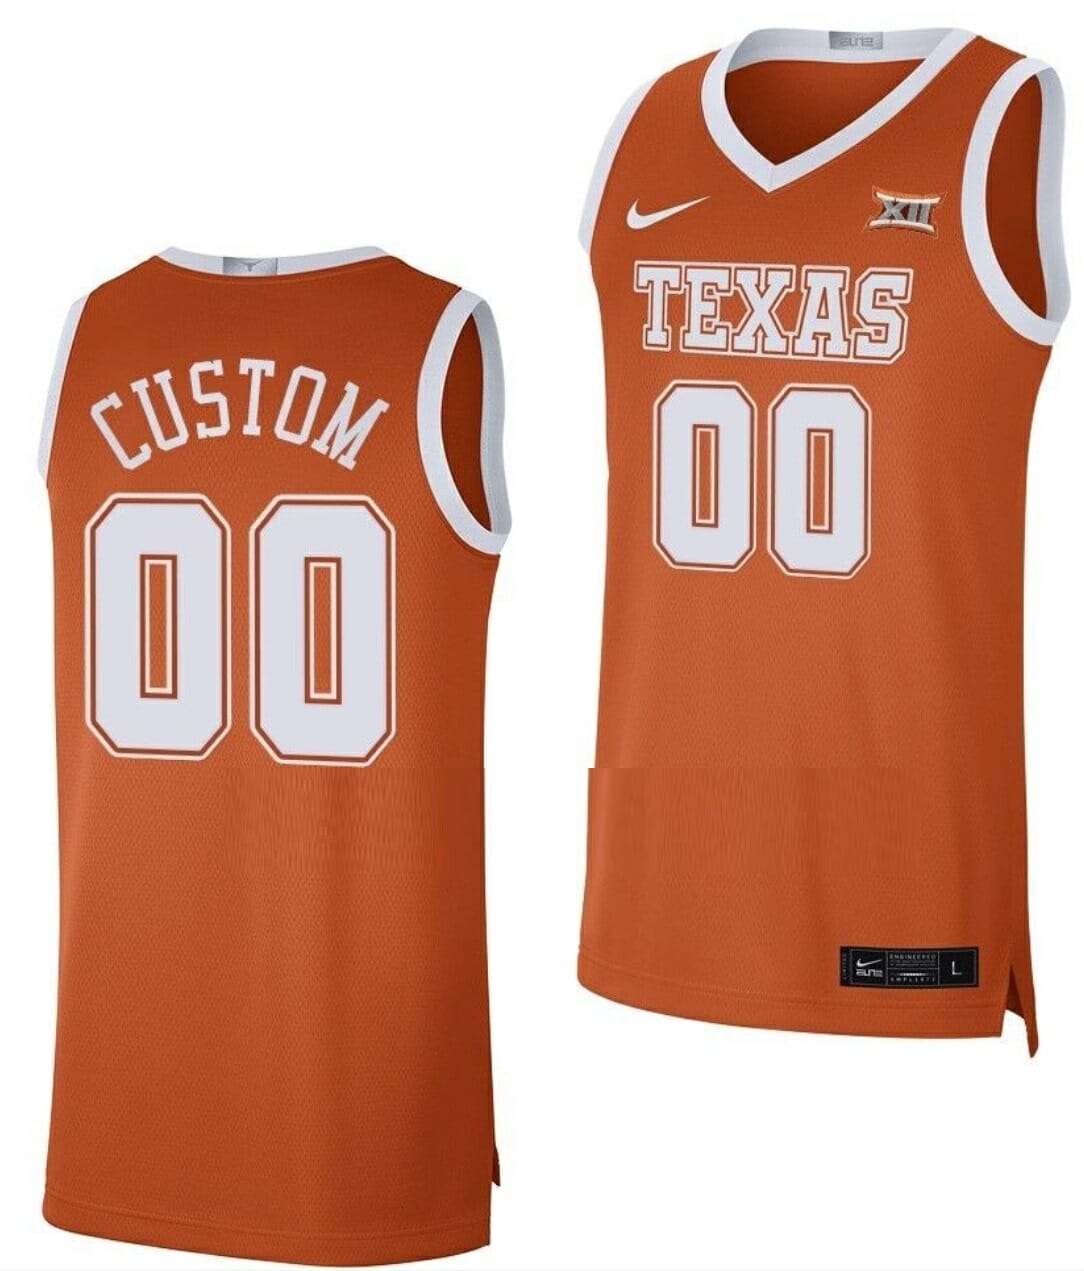 Trending Now] New Custom Texas Longhorns Jersey Orange